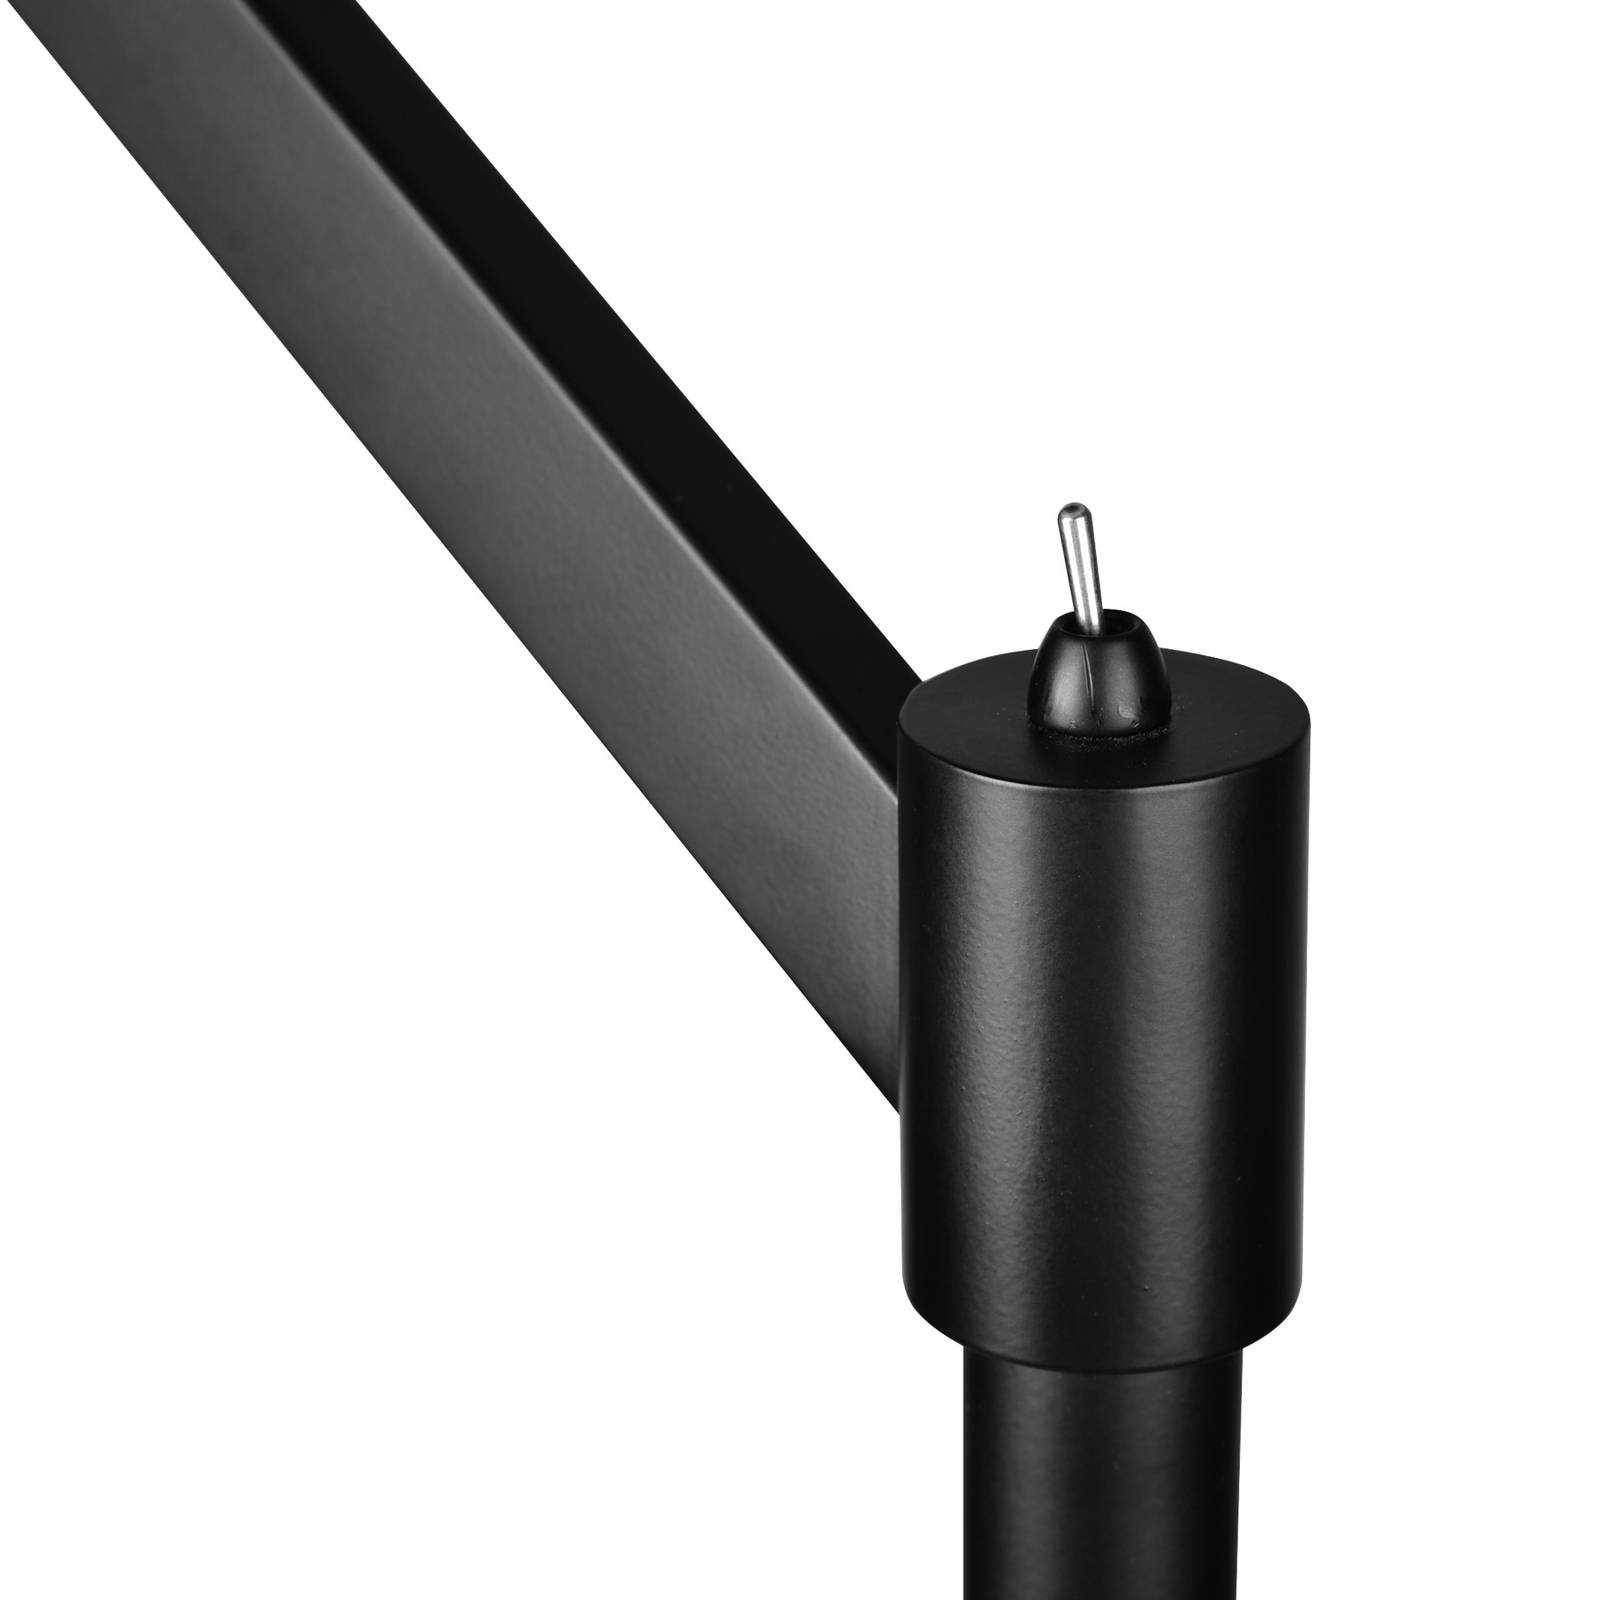 Trio Lighting Cassio floor lamp with fabric shade, black